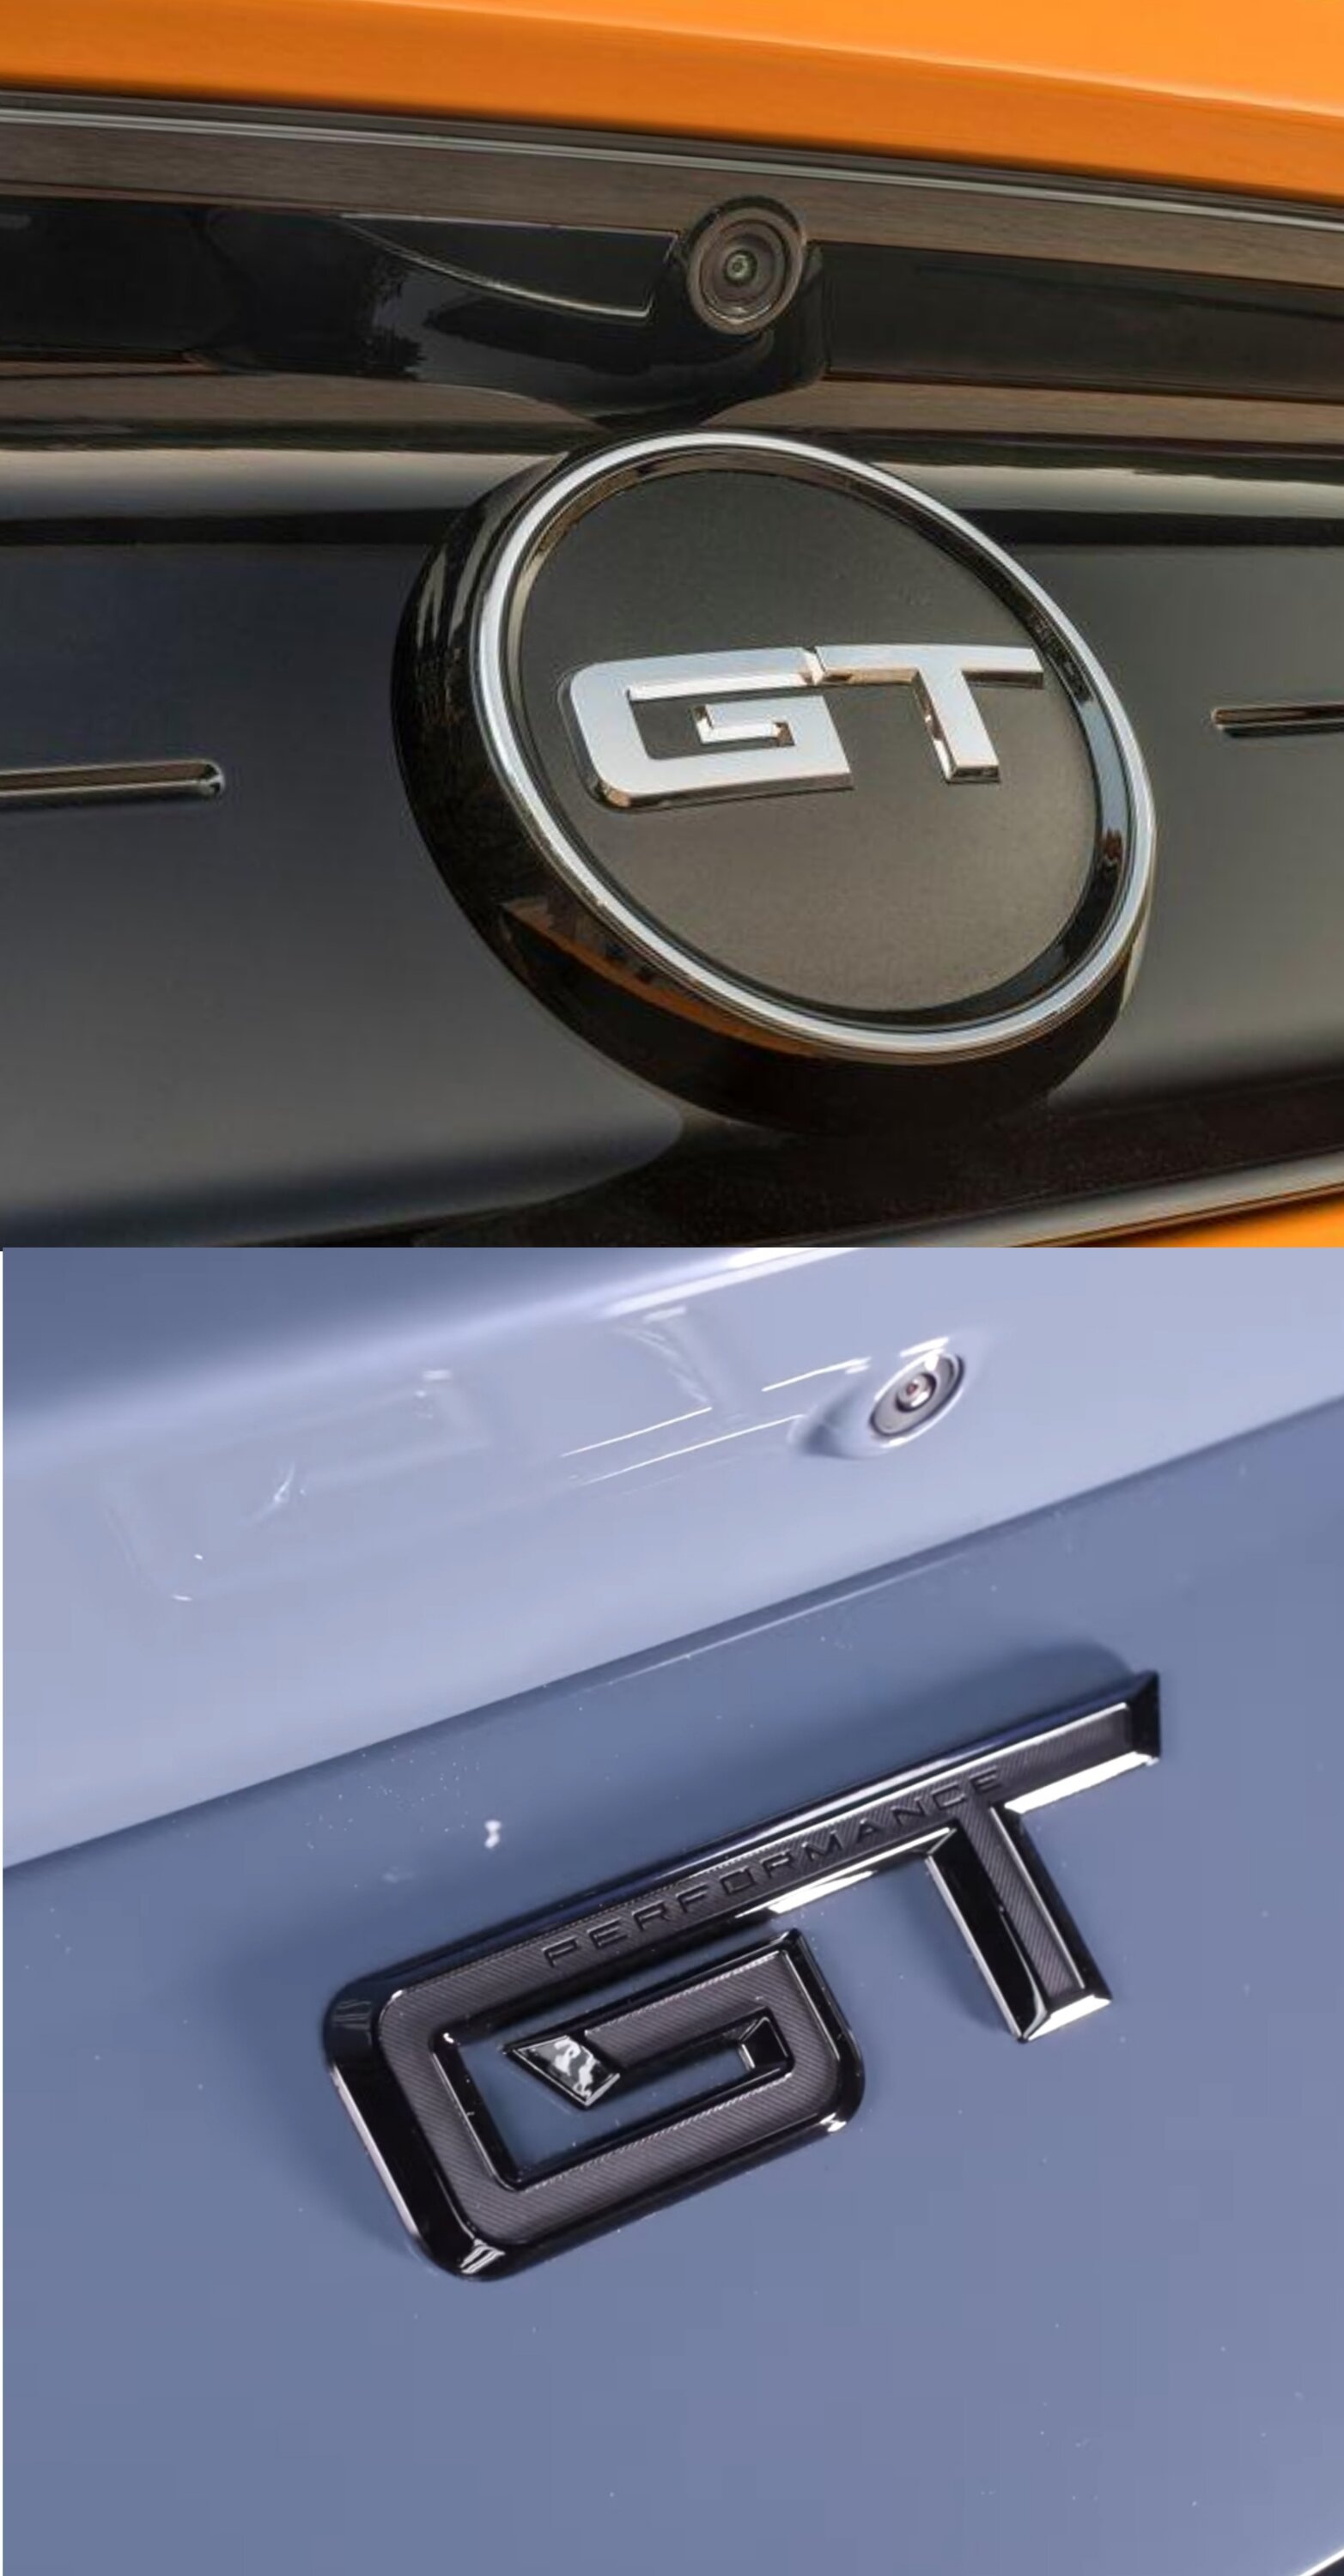 S650 Mustang S650 Mustang GT gets new badge design and loses black trunk trim - revealed in latest Stampede teaser GridArt_20220902_182239758